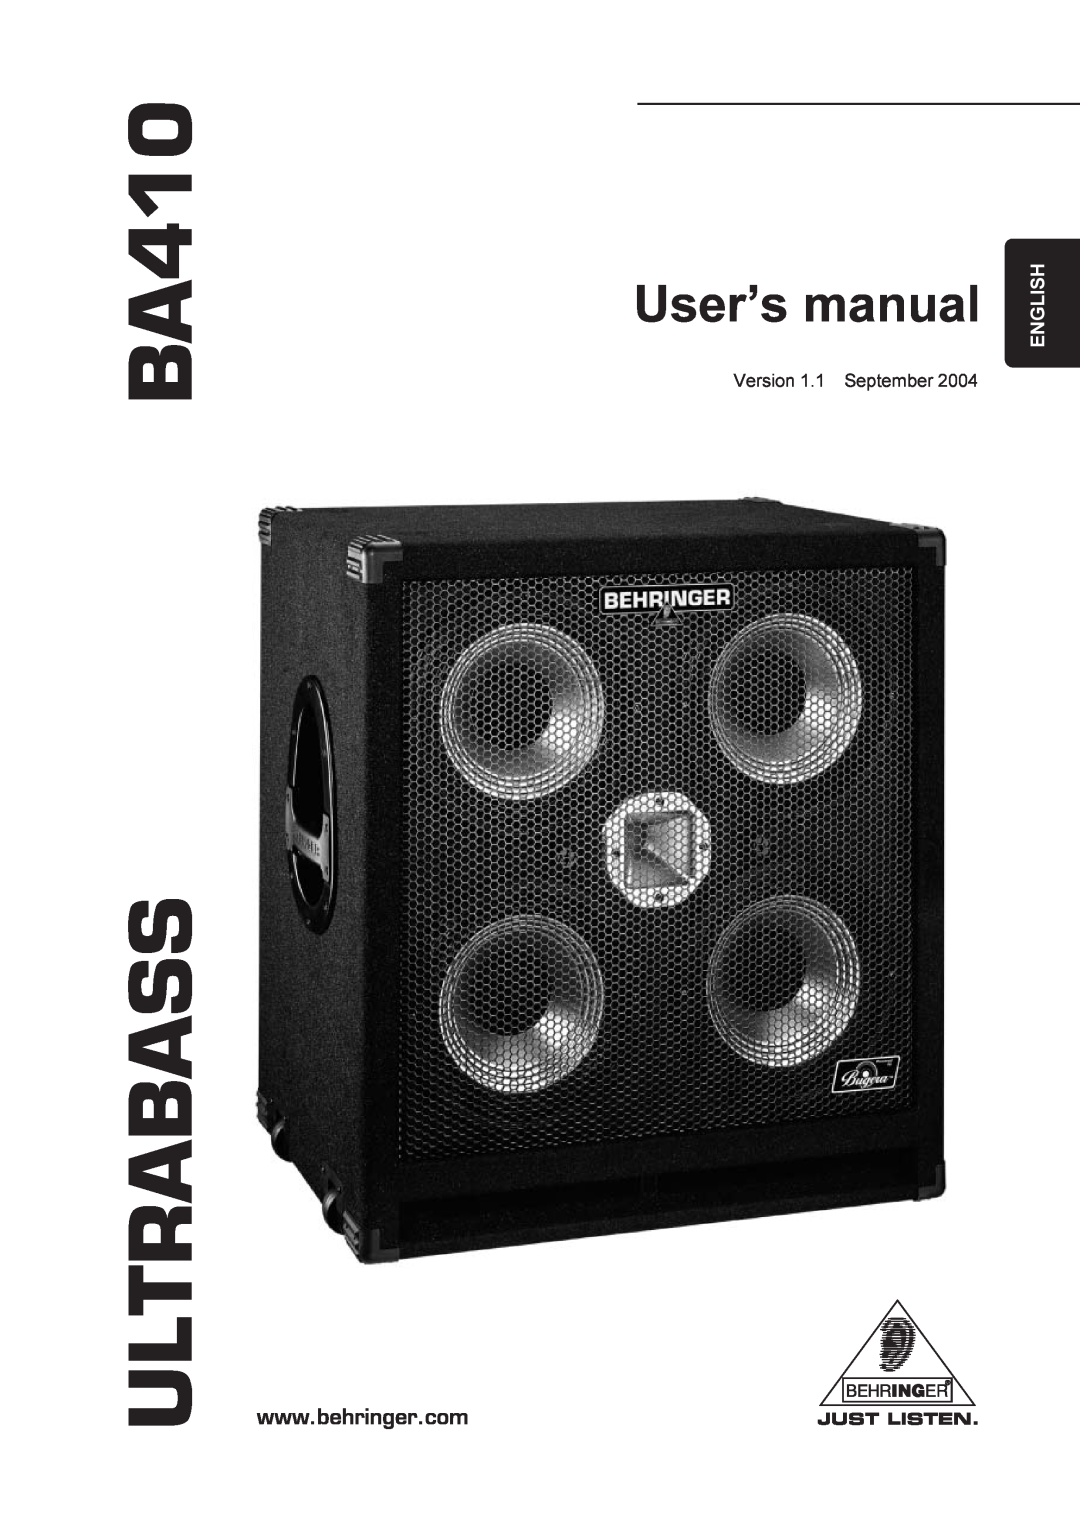 Behringer manual BA410 ULTRABASS, English 